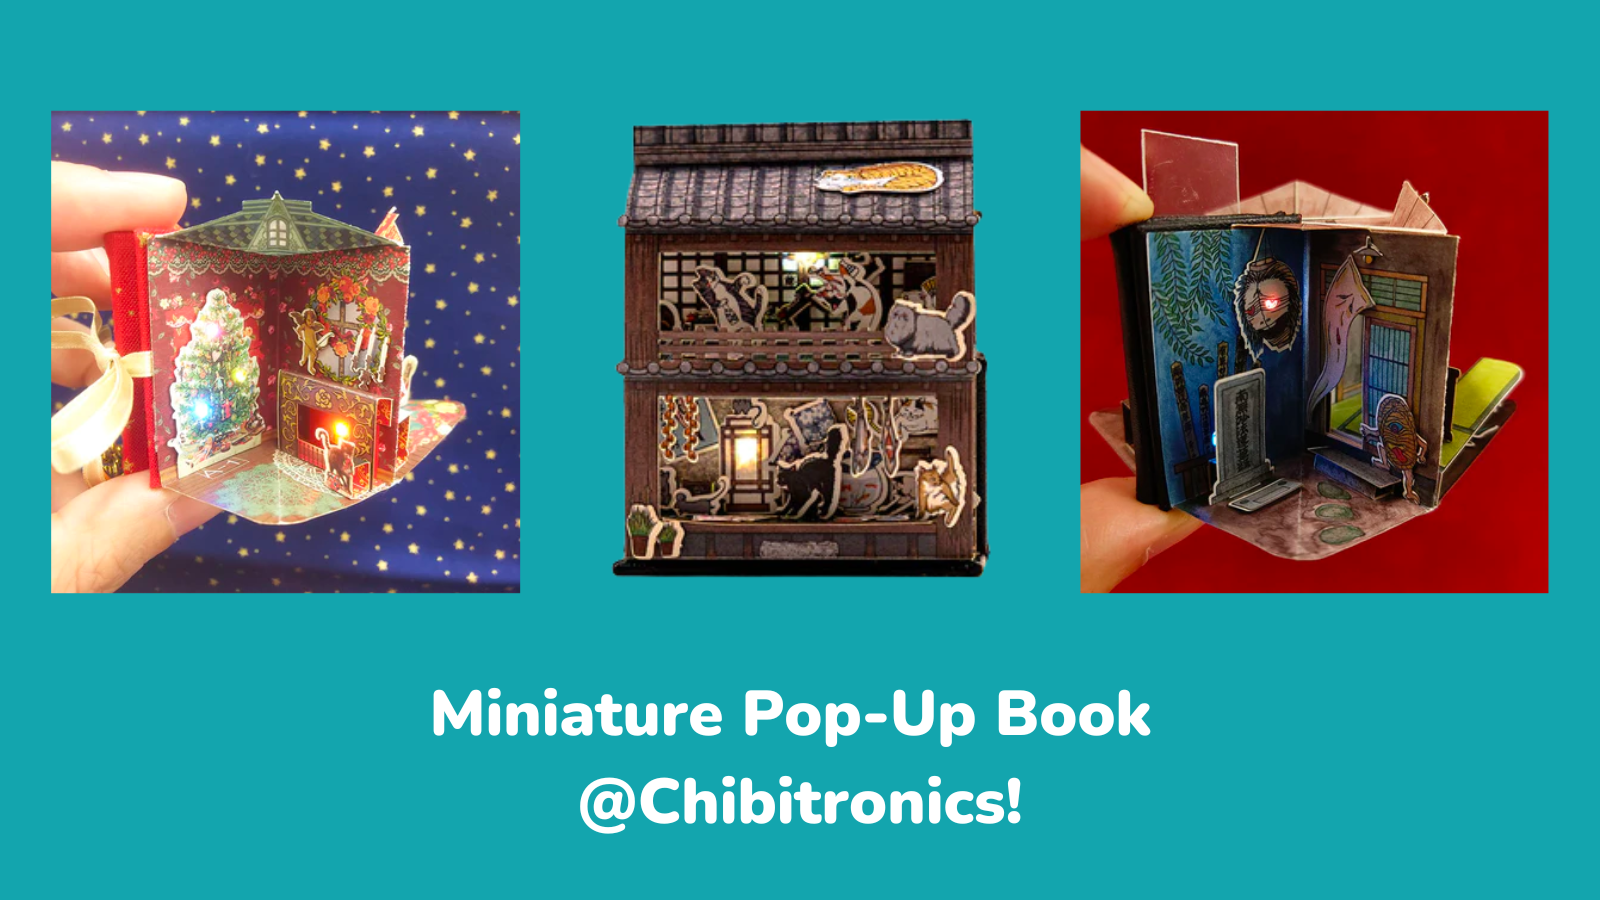 Miniature Pop-Up Book at Chibitronics!